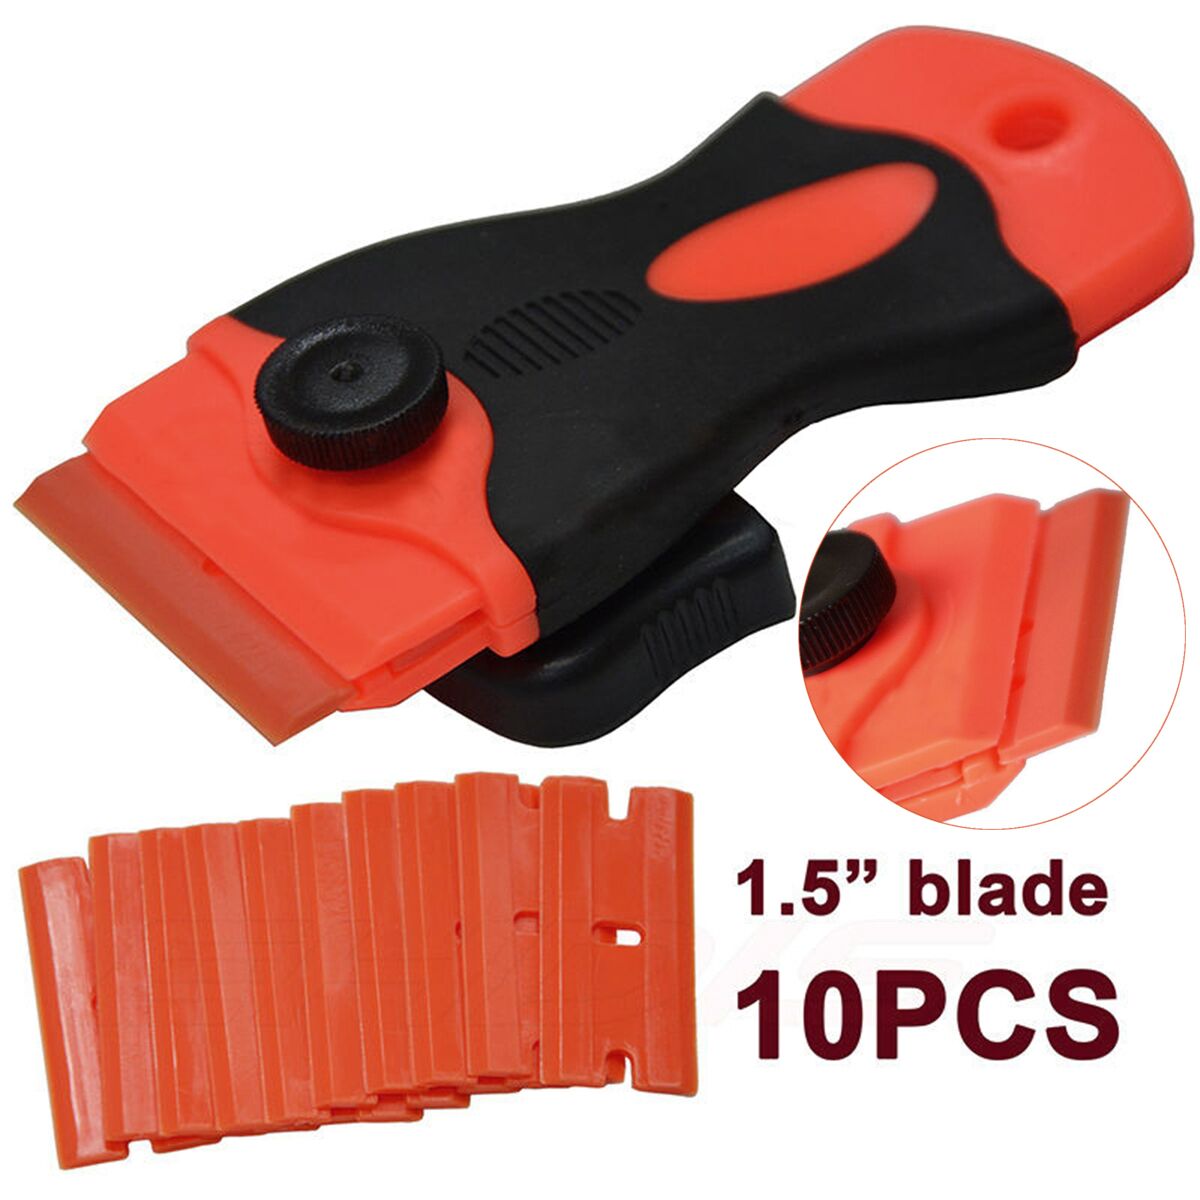 10 Plastic Scraper & 10pcs Steel Blades Knife Tinting Tools Ice Scraper Car Squeegee Vinyl Film Stickers Covers Tool